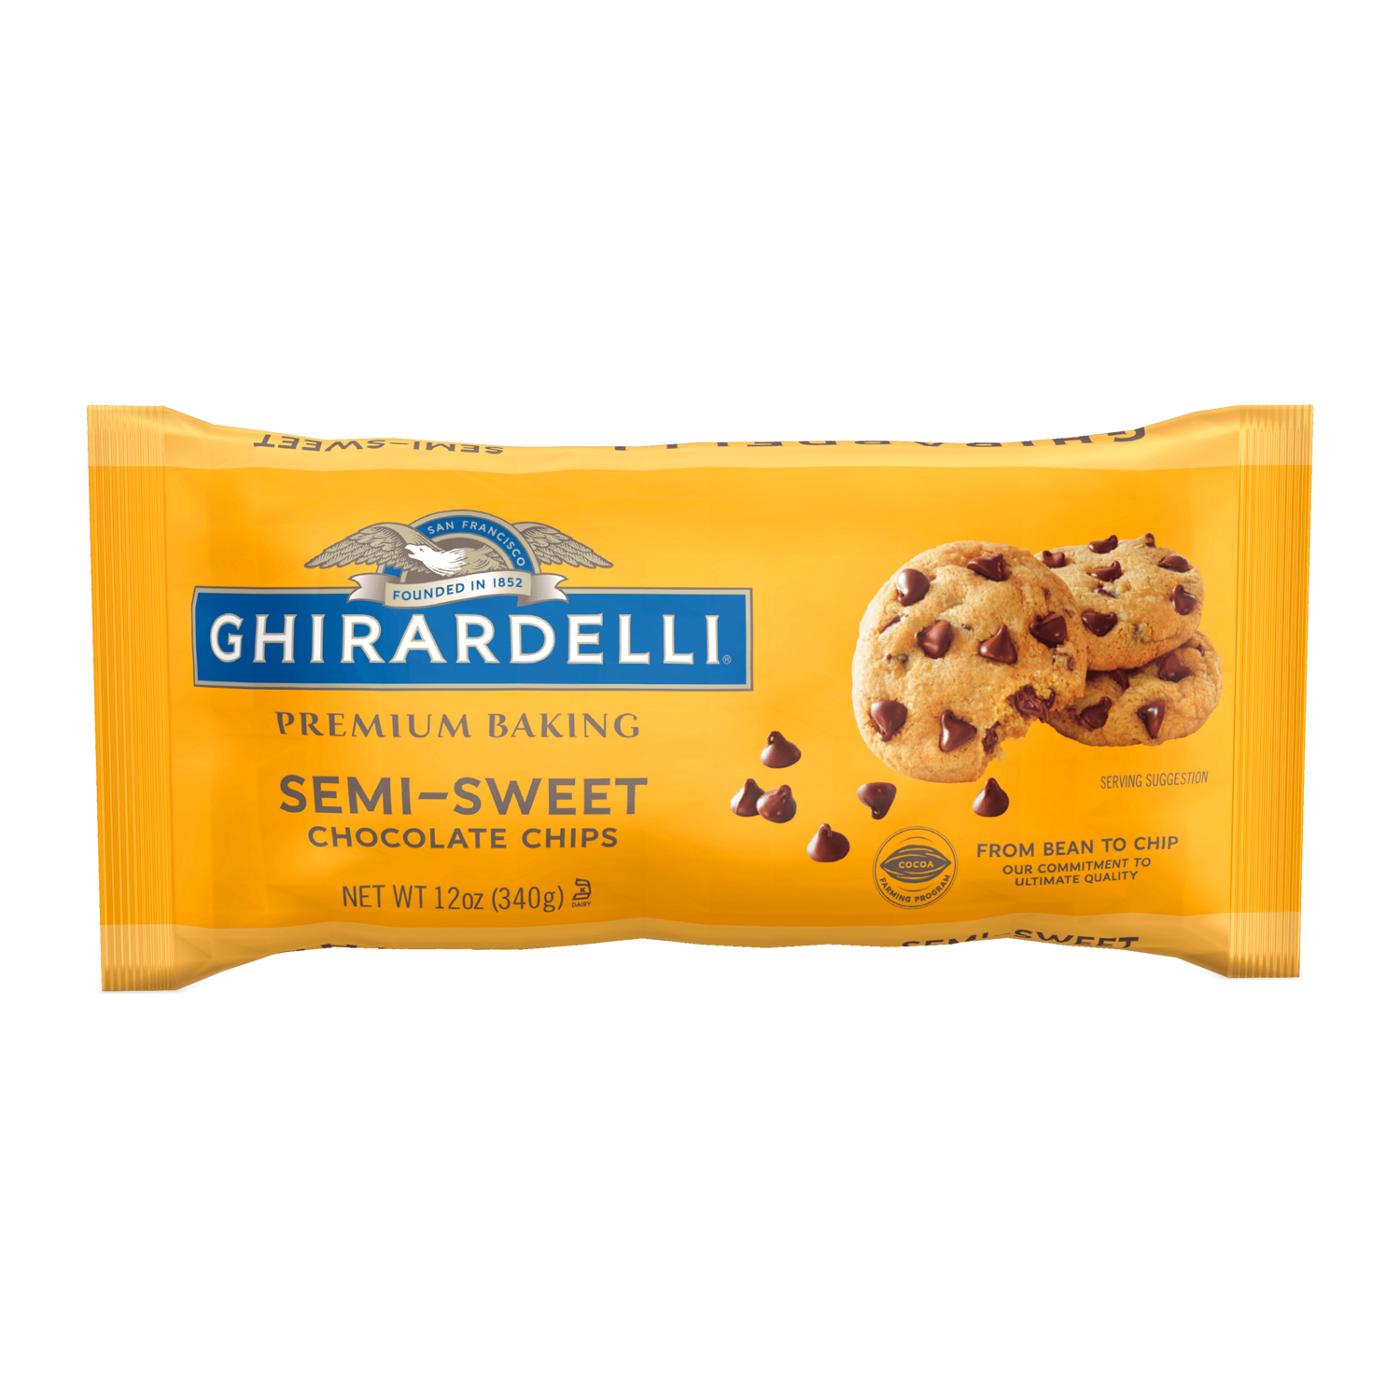 Ghirardelli Semi-Sweet Chocolate Premium Baking Chips, Chocolate Chips for Baking; image 1 of 7